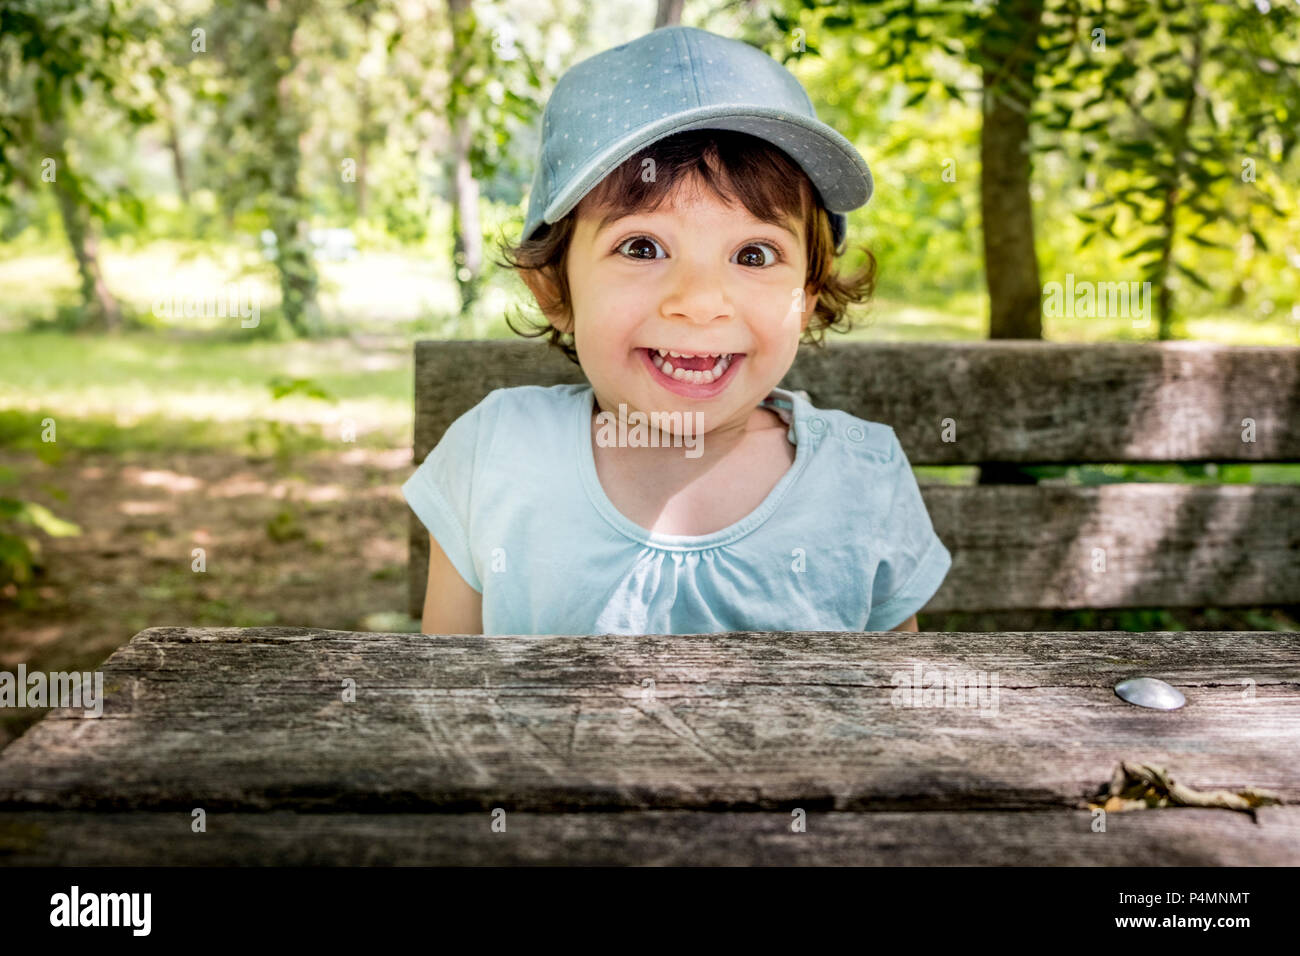 Überrascht Kinder lächeln freudig - Baby Baseball Cap - Outdoor Aktiv naughty glückliches Kind. Stockfoto